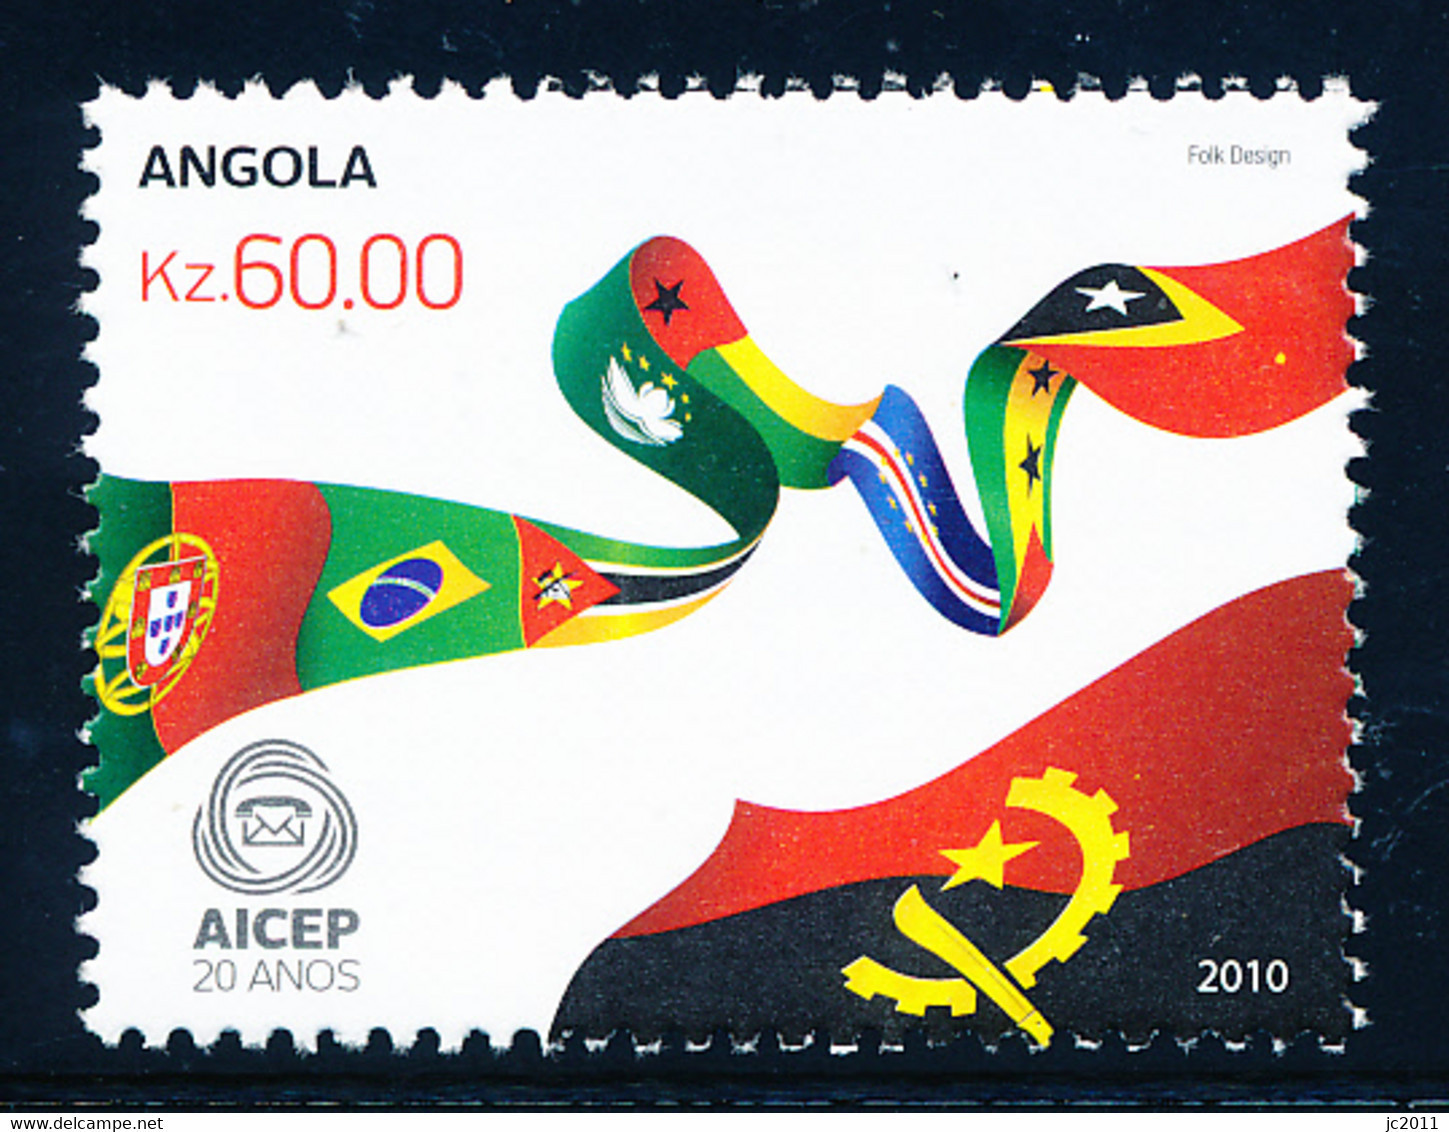 Angola - 2010 - AICEP - MNH - Angola